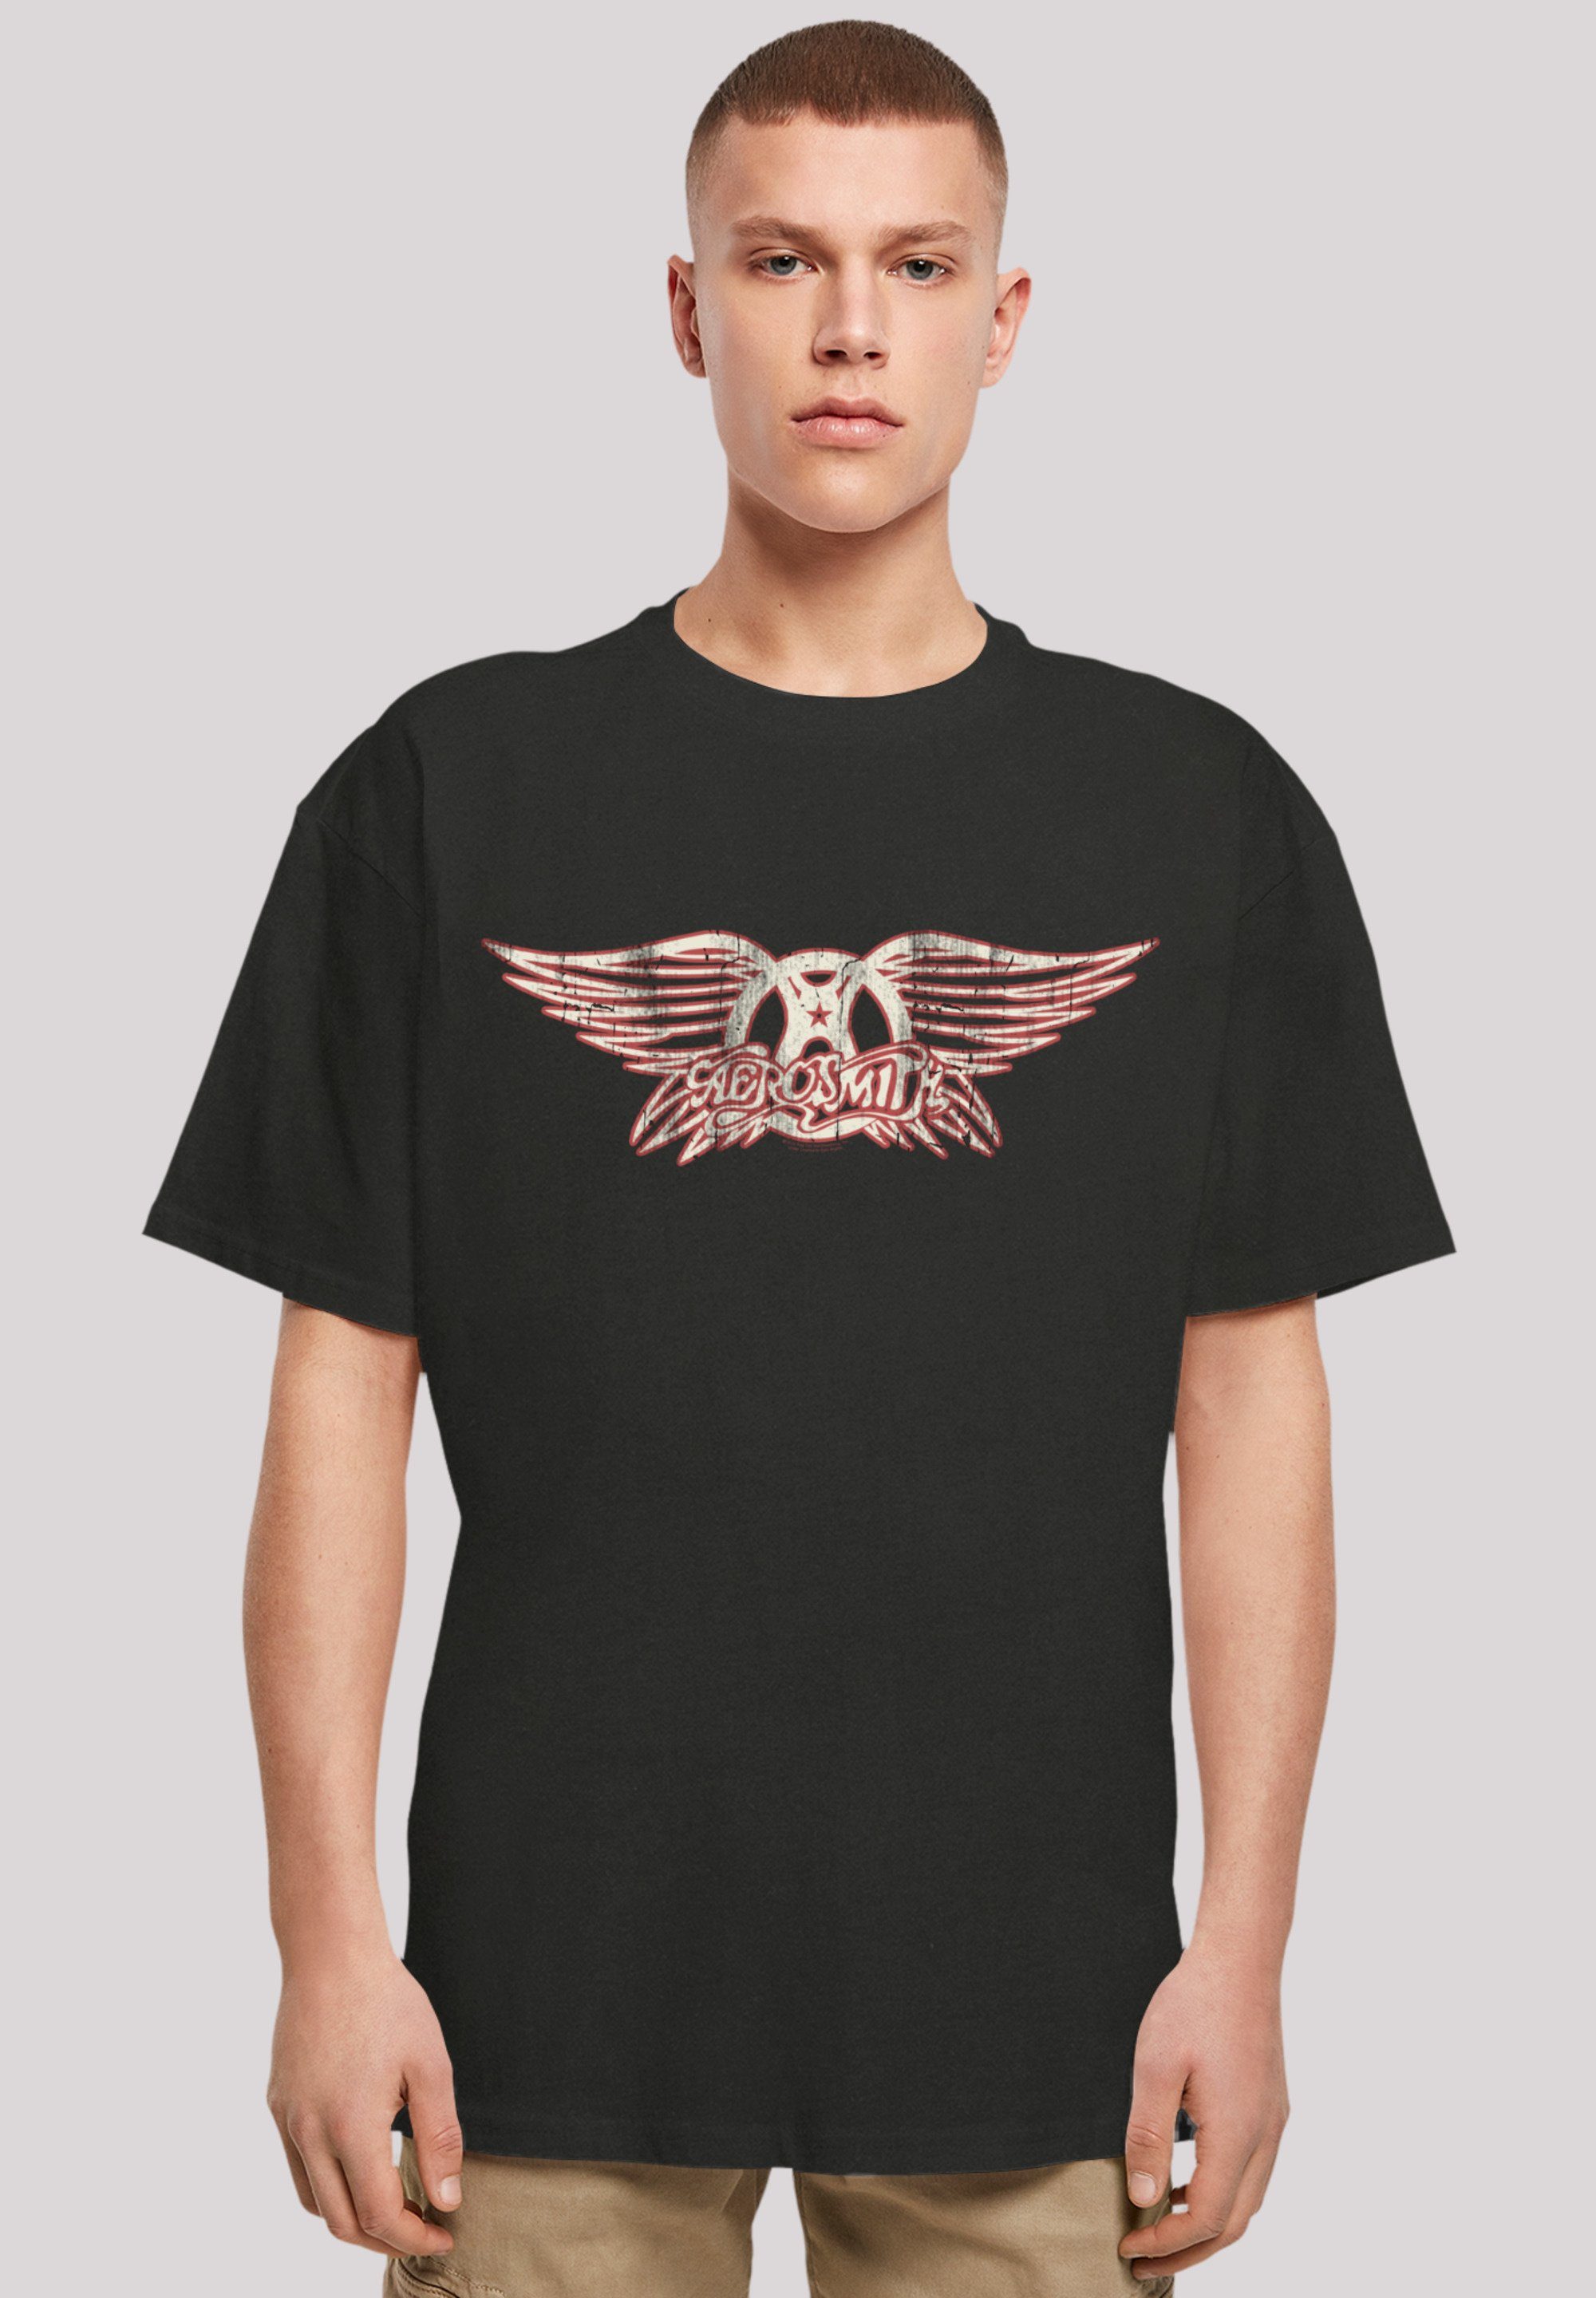 F4NT4STIC T-Shirt Aerosmith Rock Band Logo Premium Qualität, Rock-Musik, Band schwarz